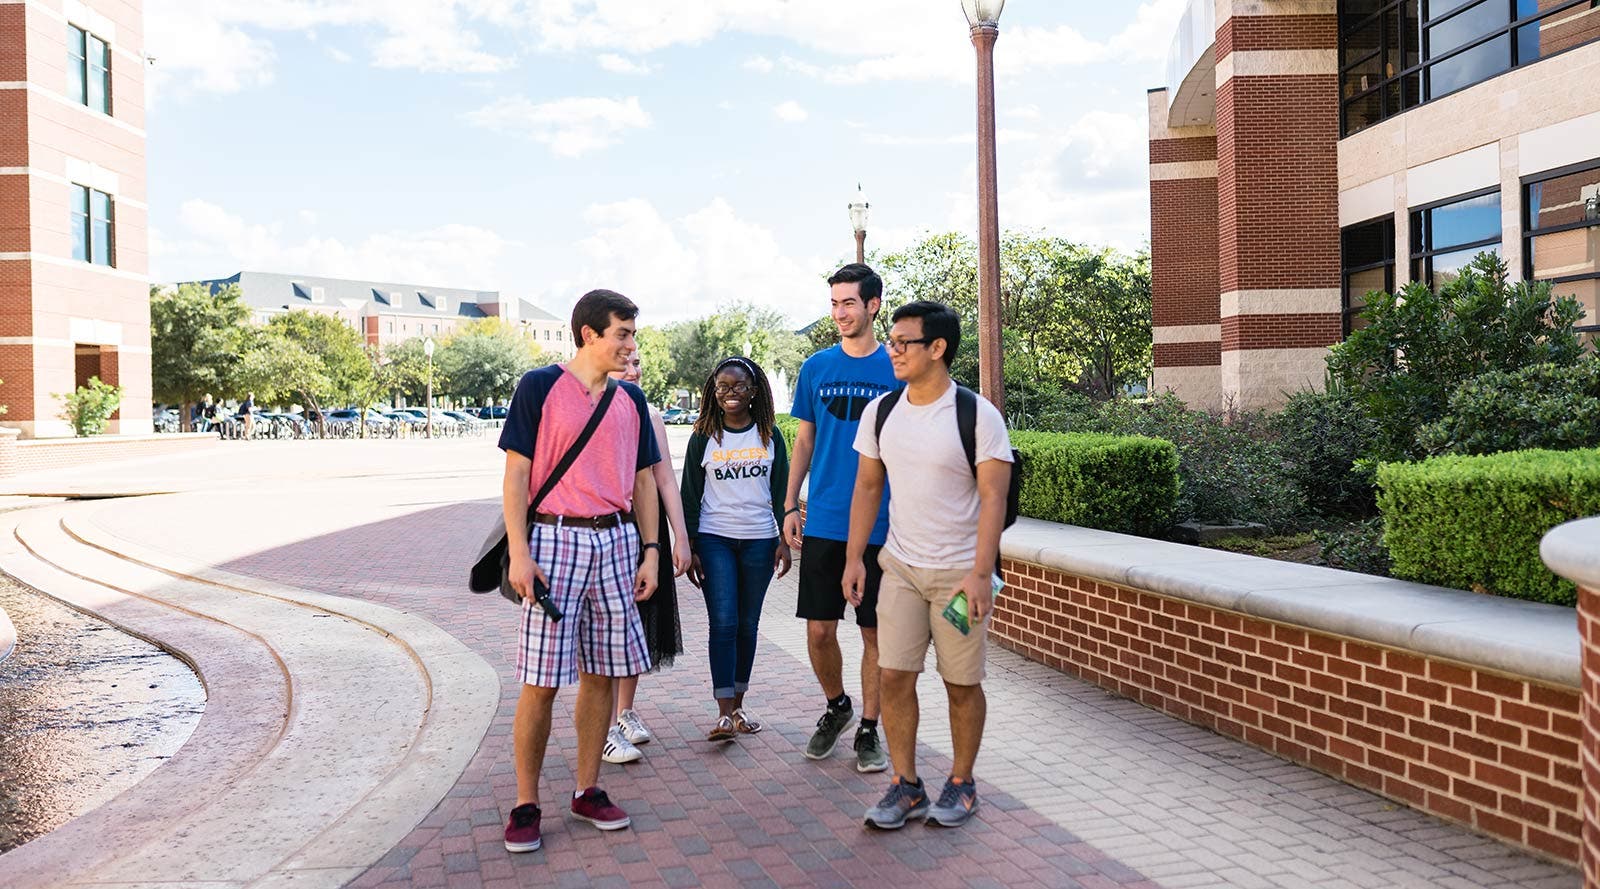 Five Baylor students walking together outside on campus.